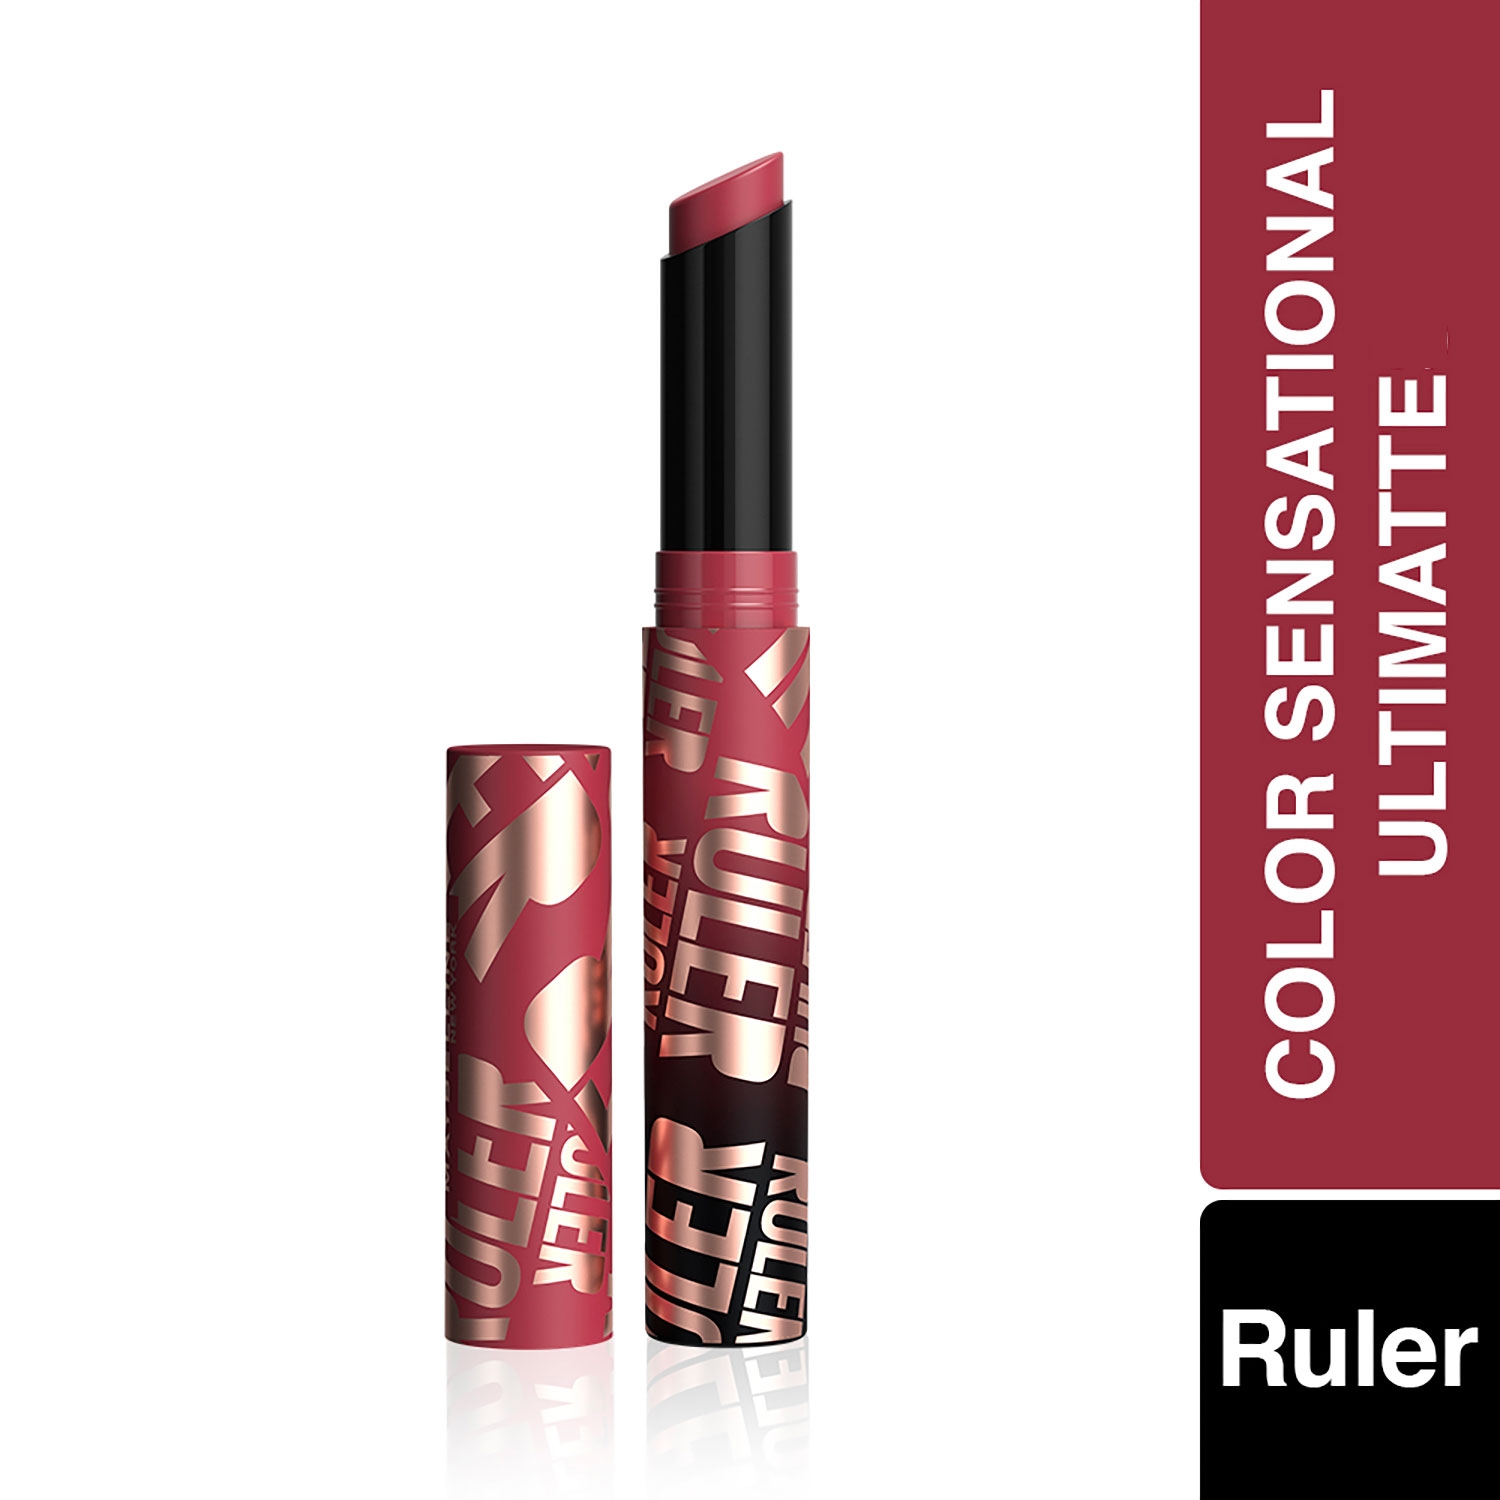 Maybelline New York | Maybelline New York Color Sensational Ultimatte Lipstick - Ruler (1.7g)